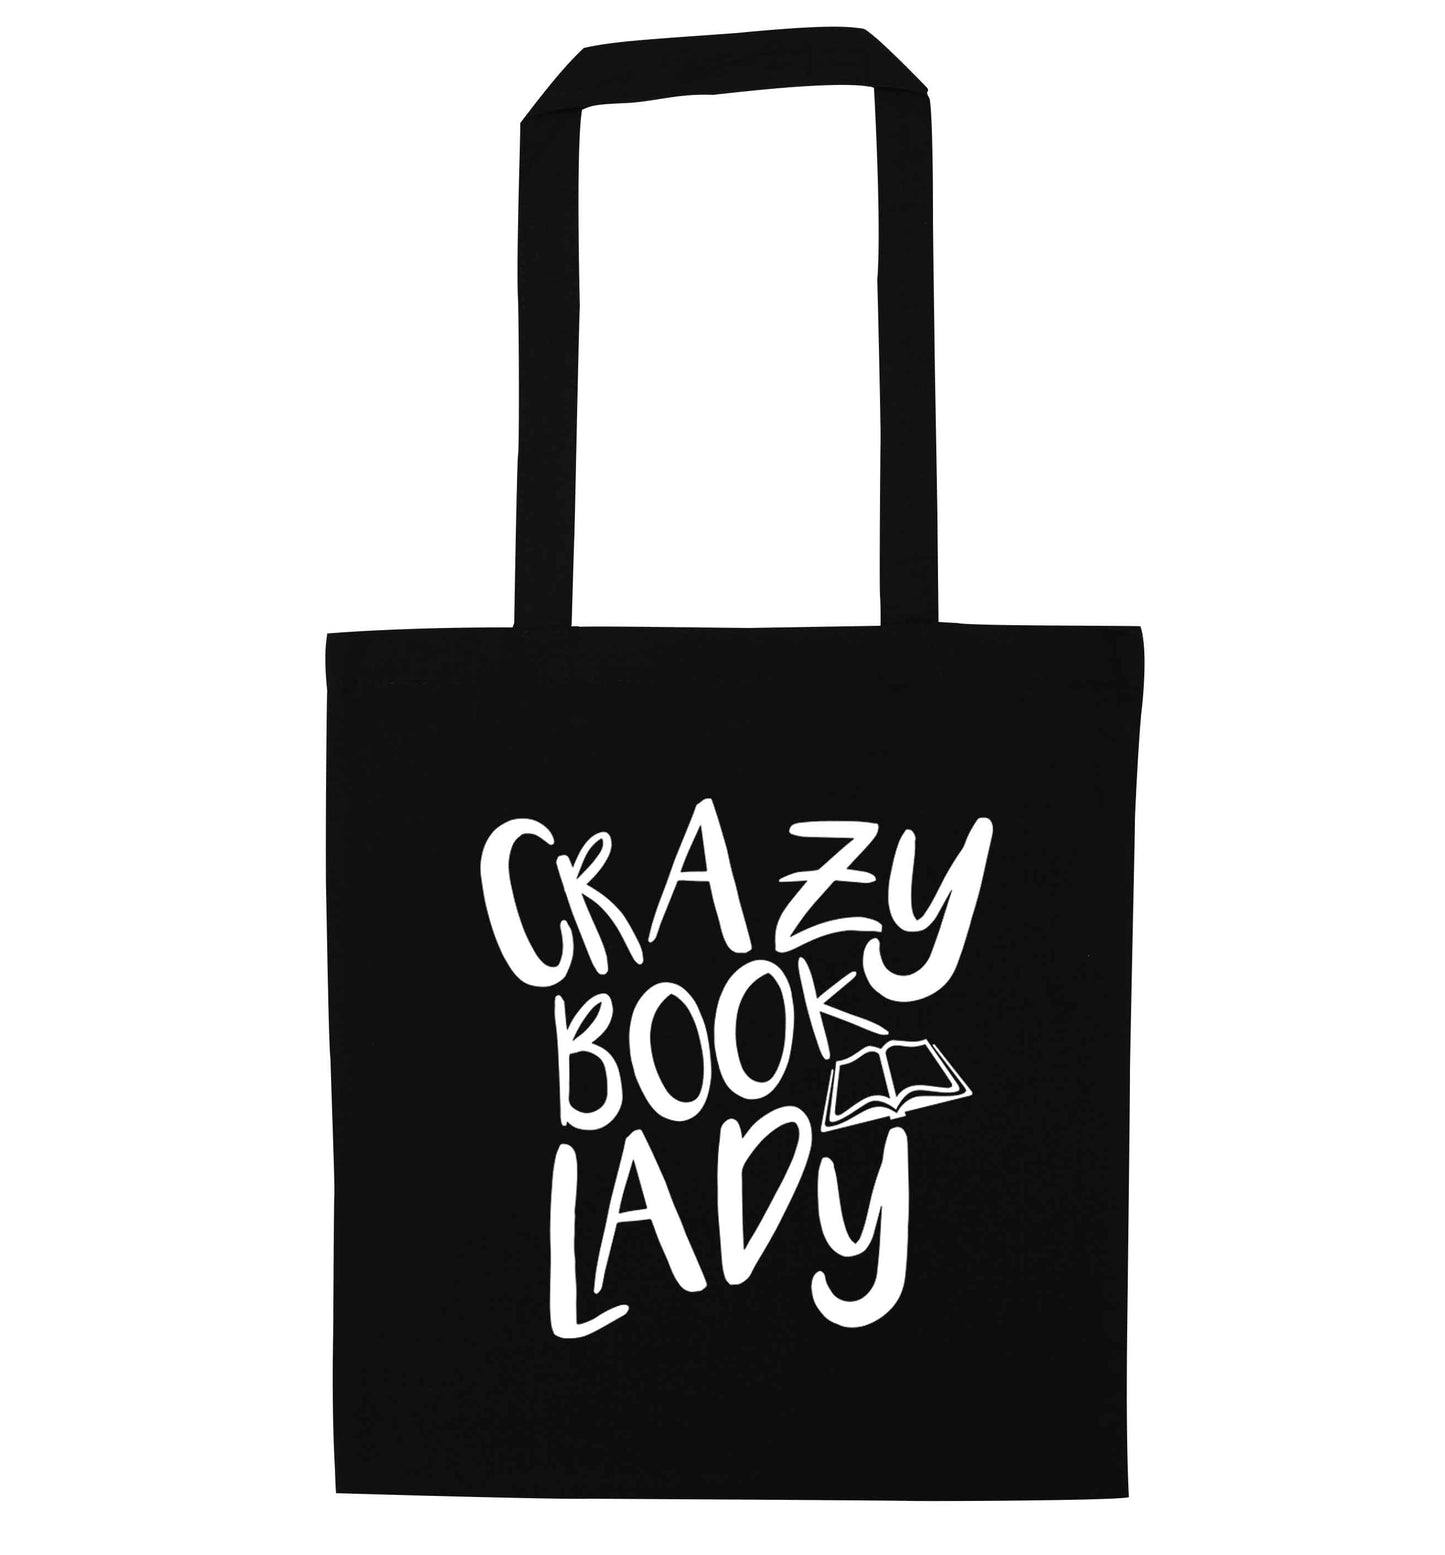 Crazy book lady black tote bag